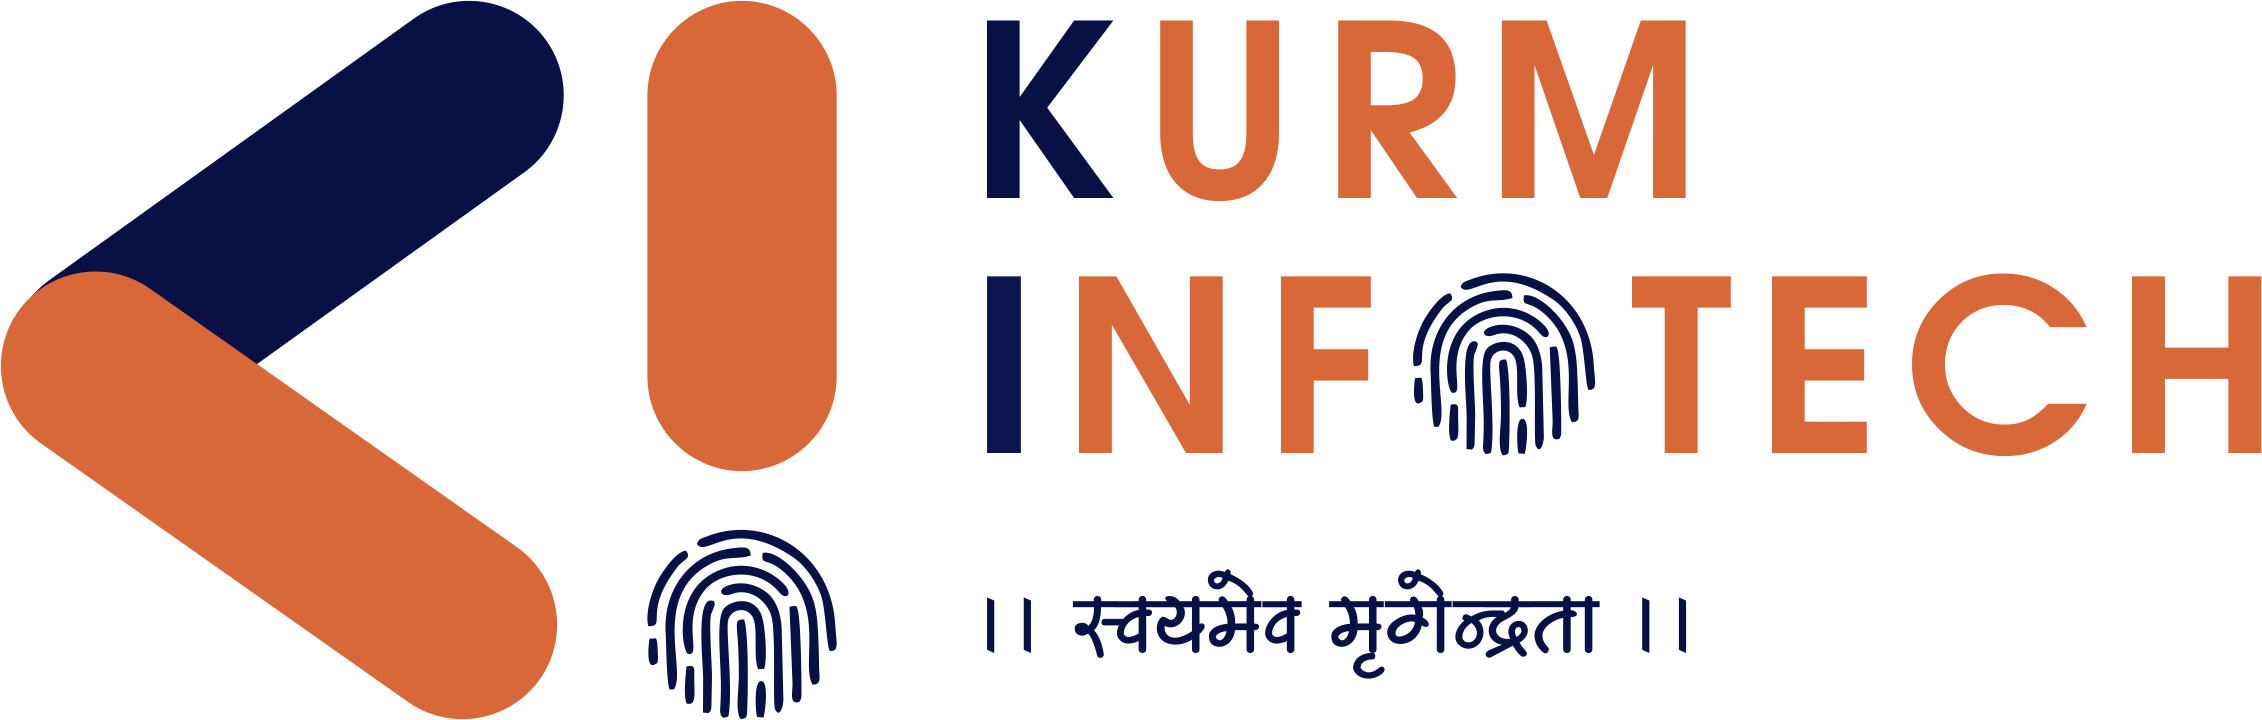 kurm logo